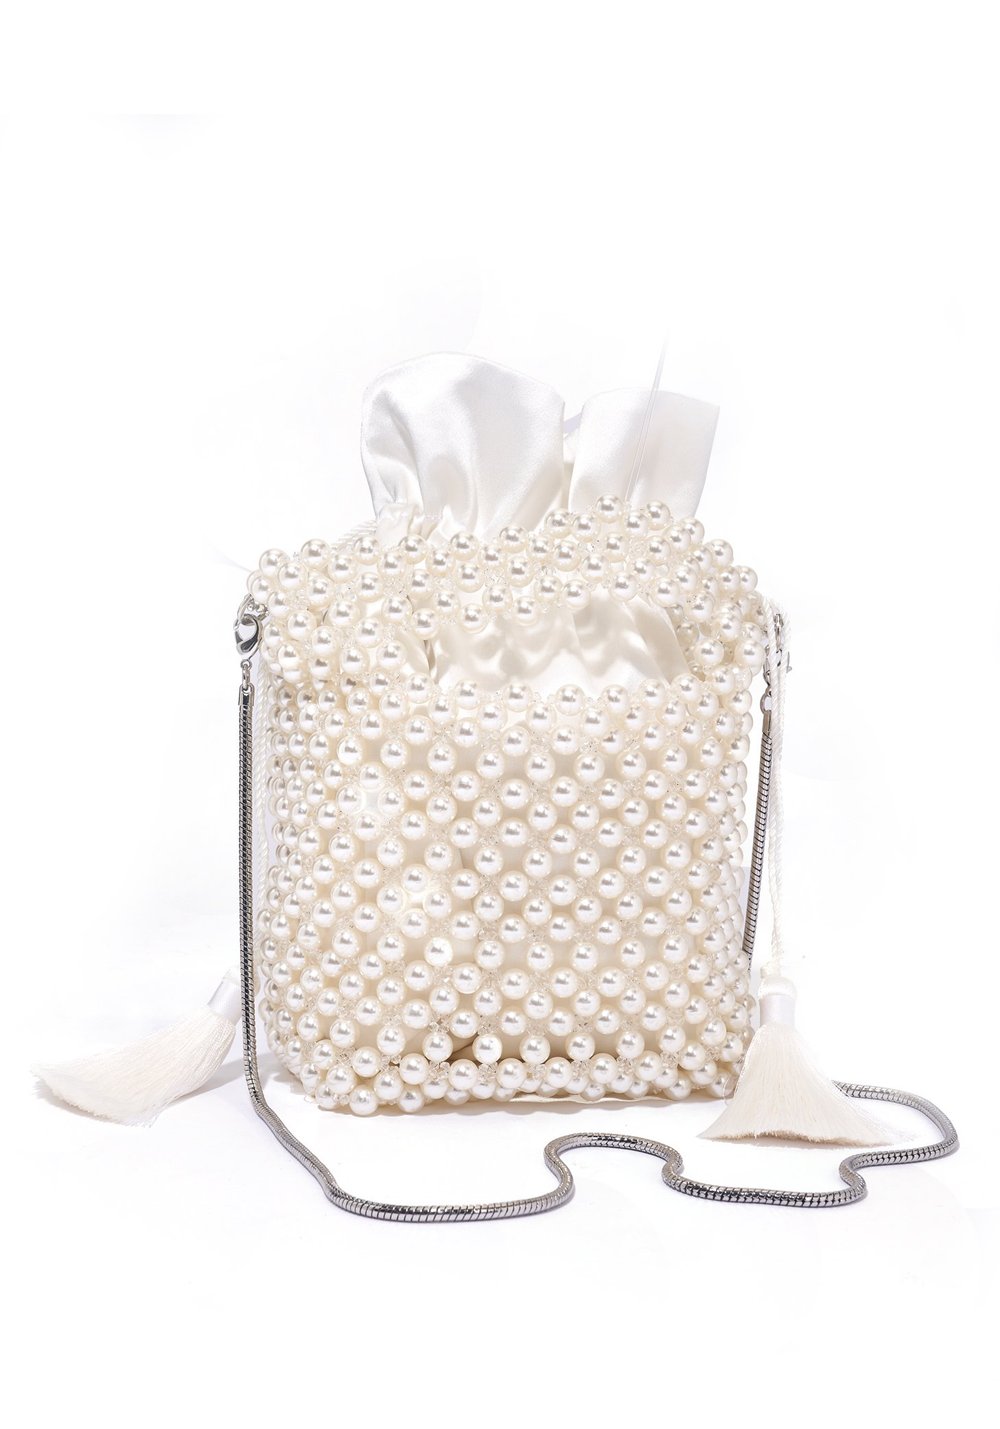 Emm Kuo Montauk Pearl Bucket Bag — Elements